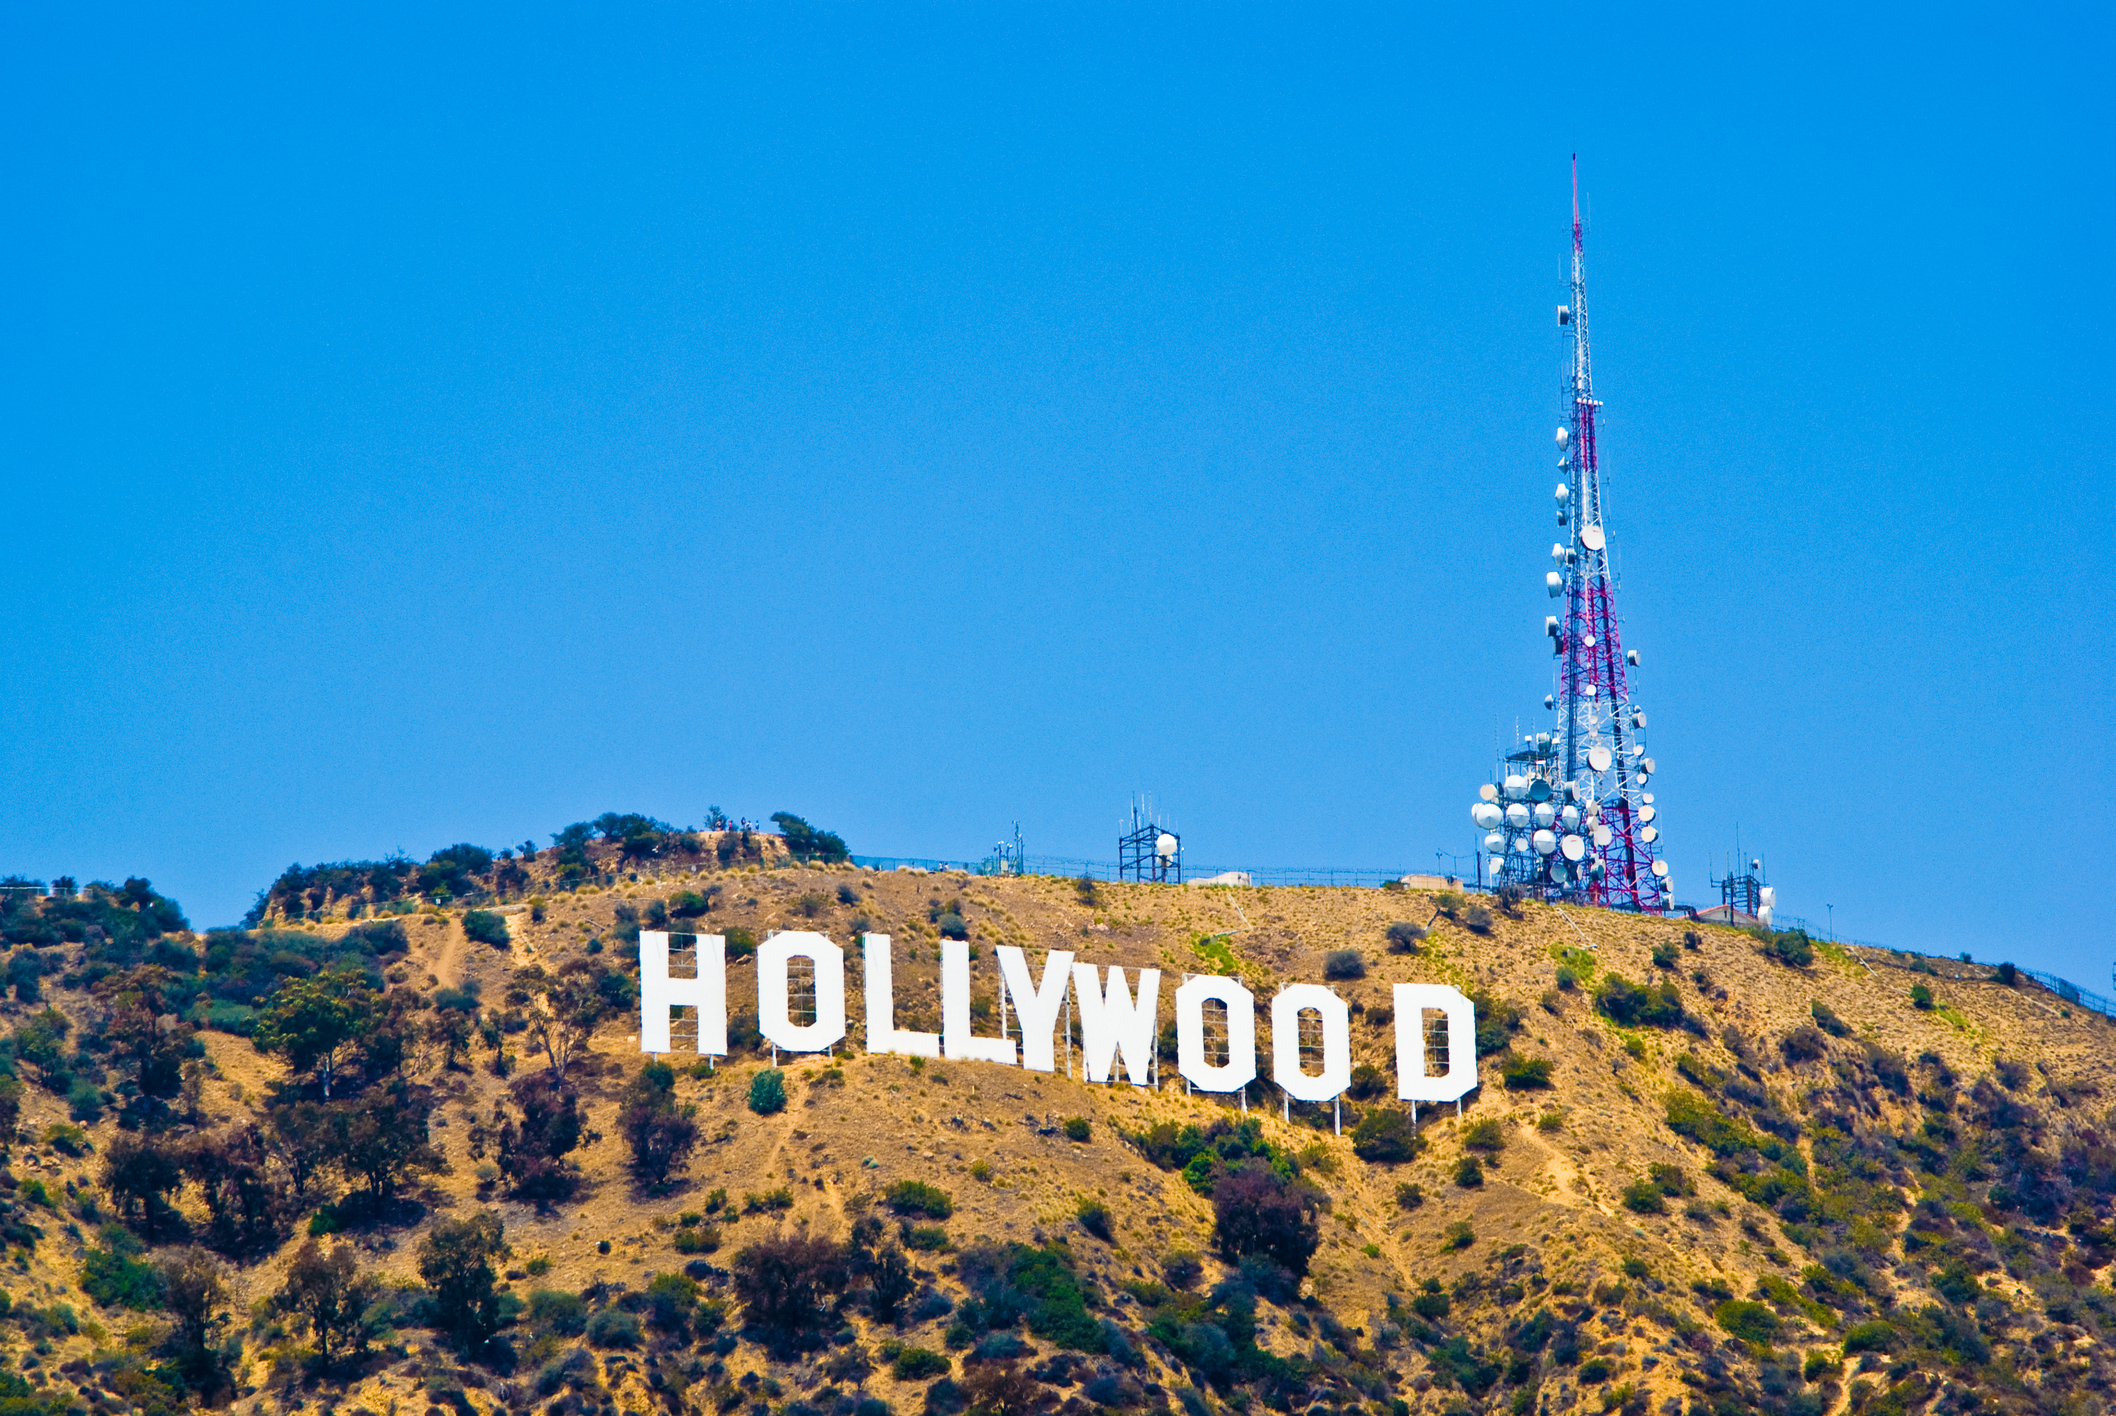 Голливуд это город. Лос Анджелес надпись Голливуд. Лос-Анджелес Калифорния Голливуд. Лос Анджелес гора Голливуд. Лос Анджелес вывеска Голливуд.